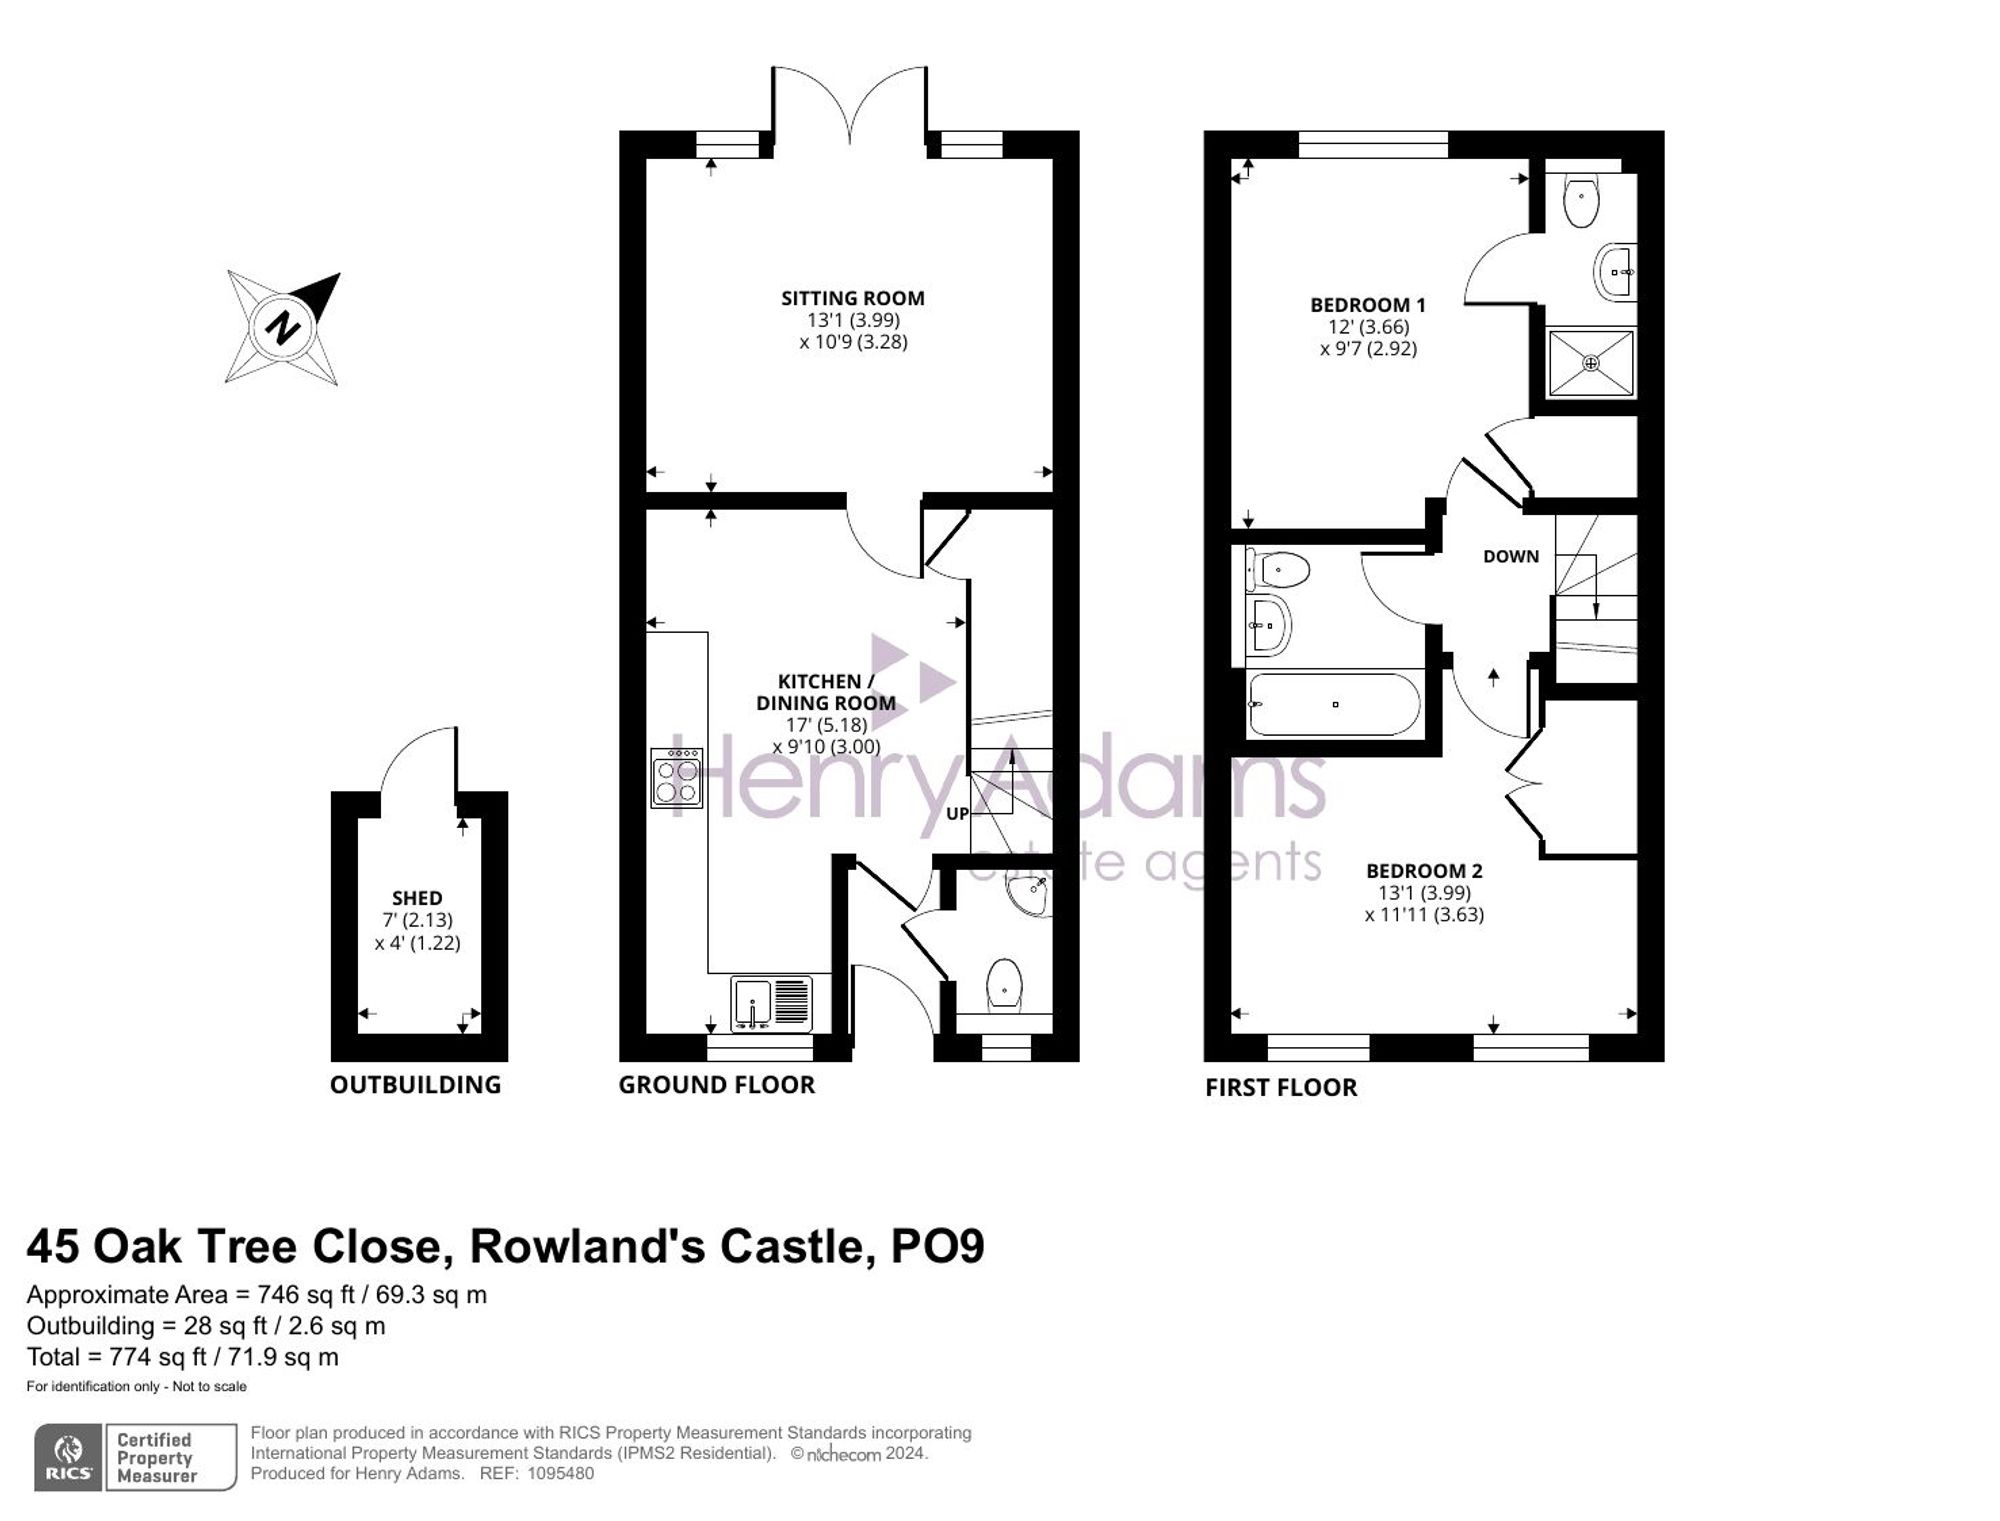 Oak Tree Close, Rowland's Castle, PO9 floorplans